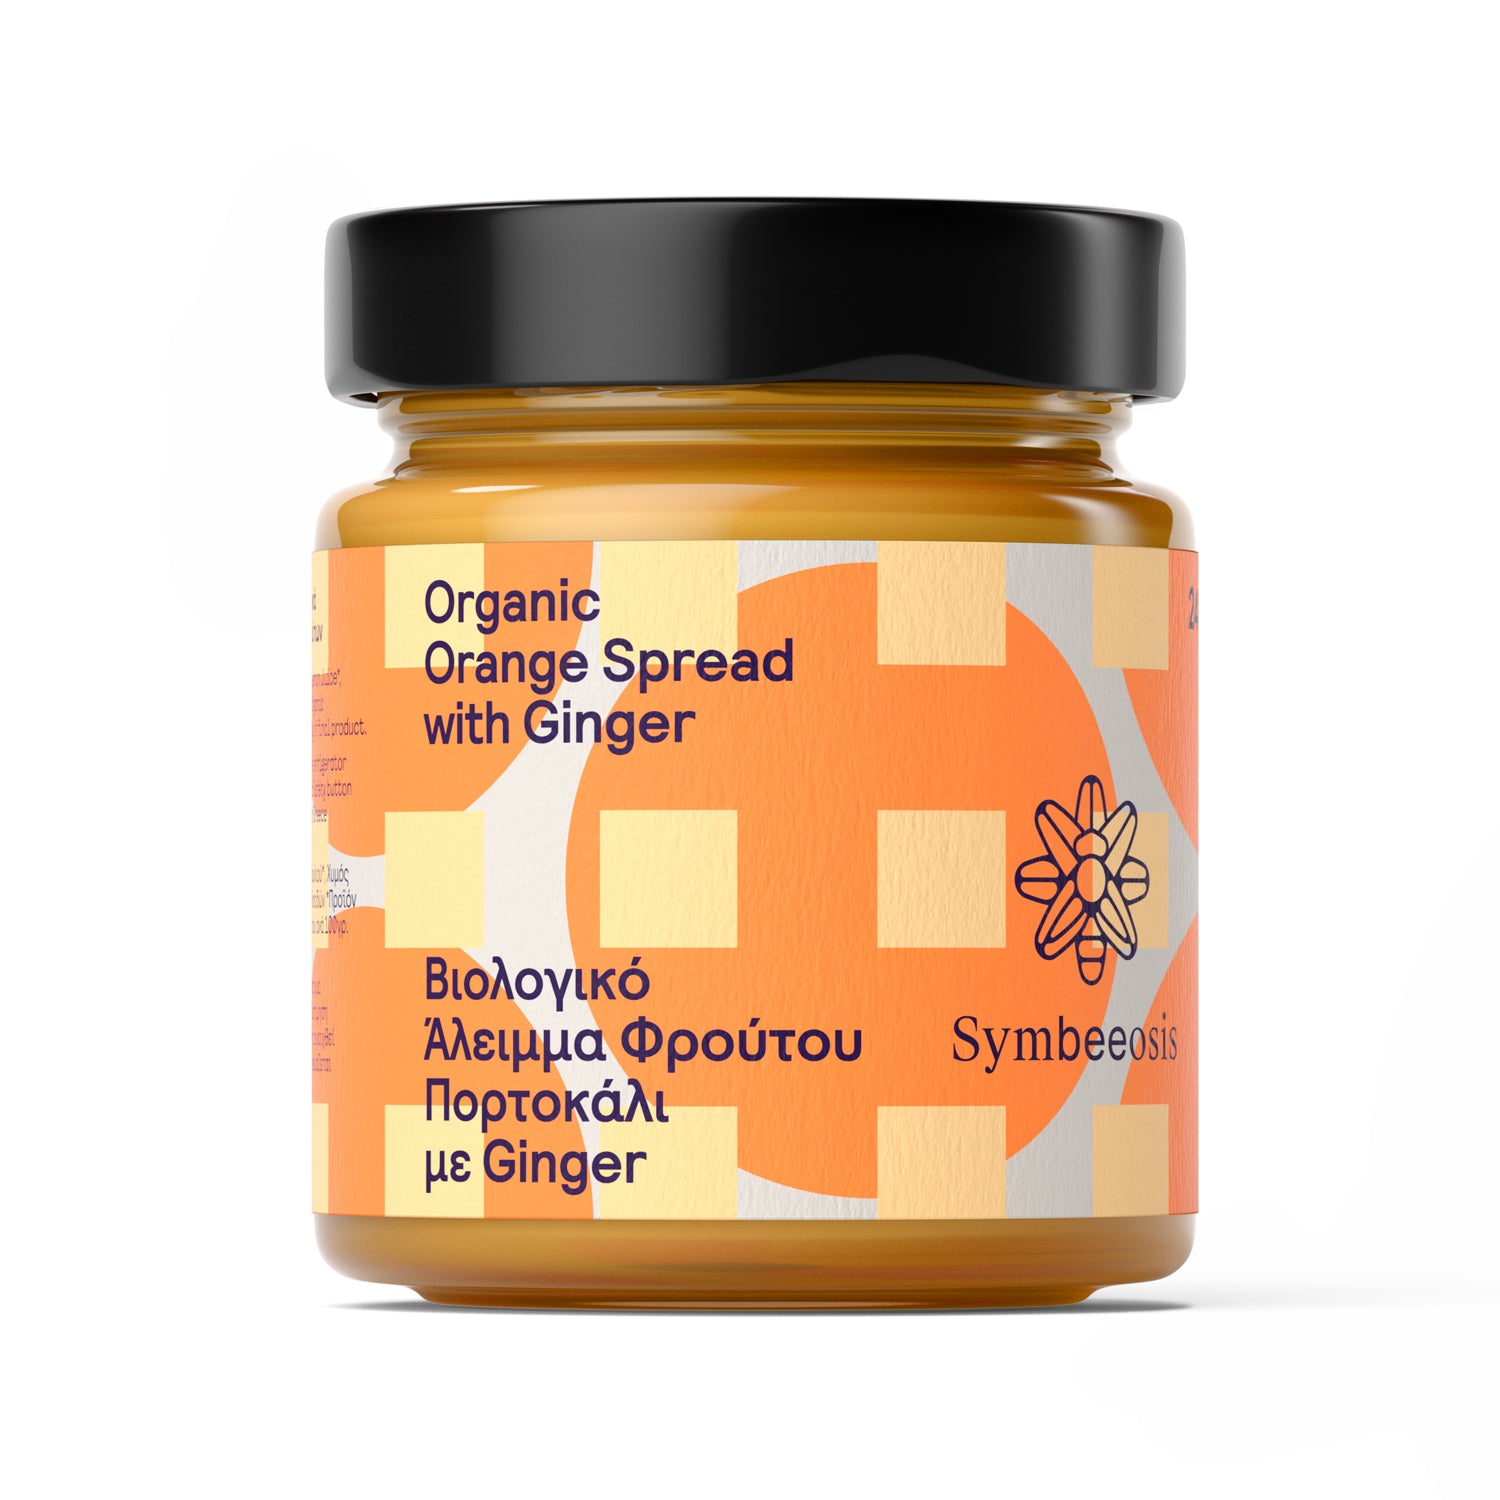 Organic Orange Spread with Ginger - 240g - Symbeeosis